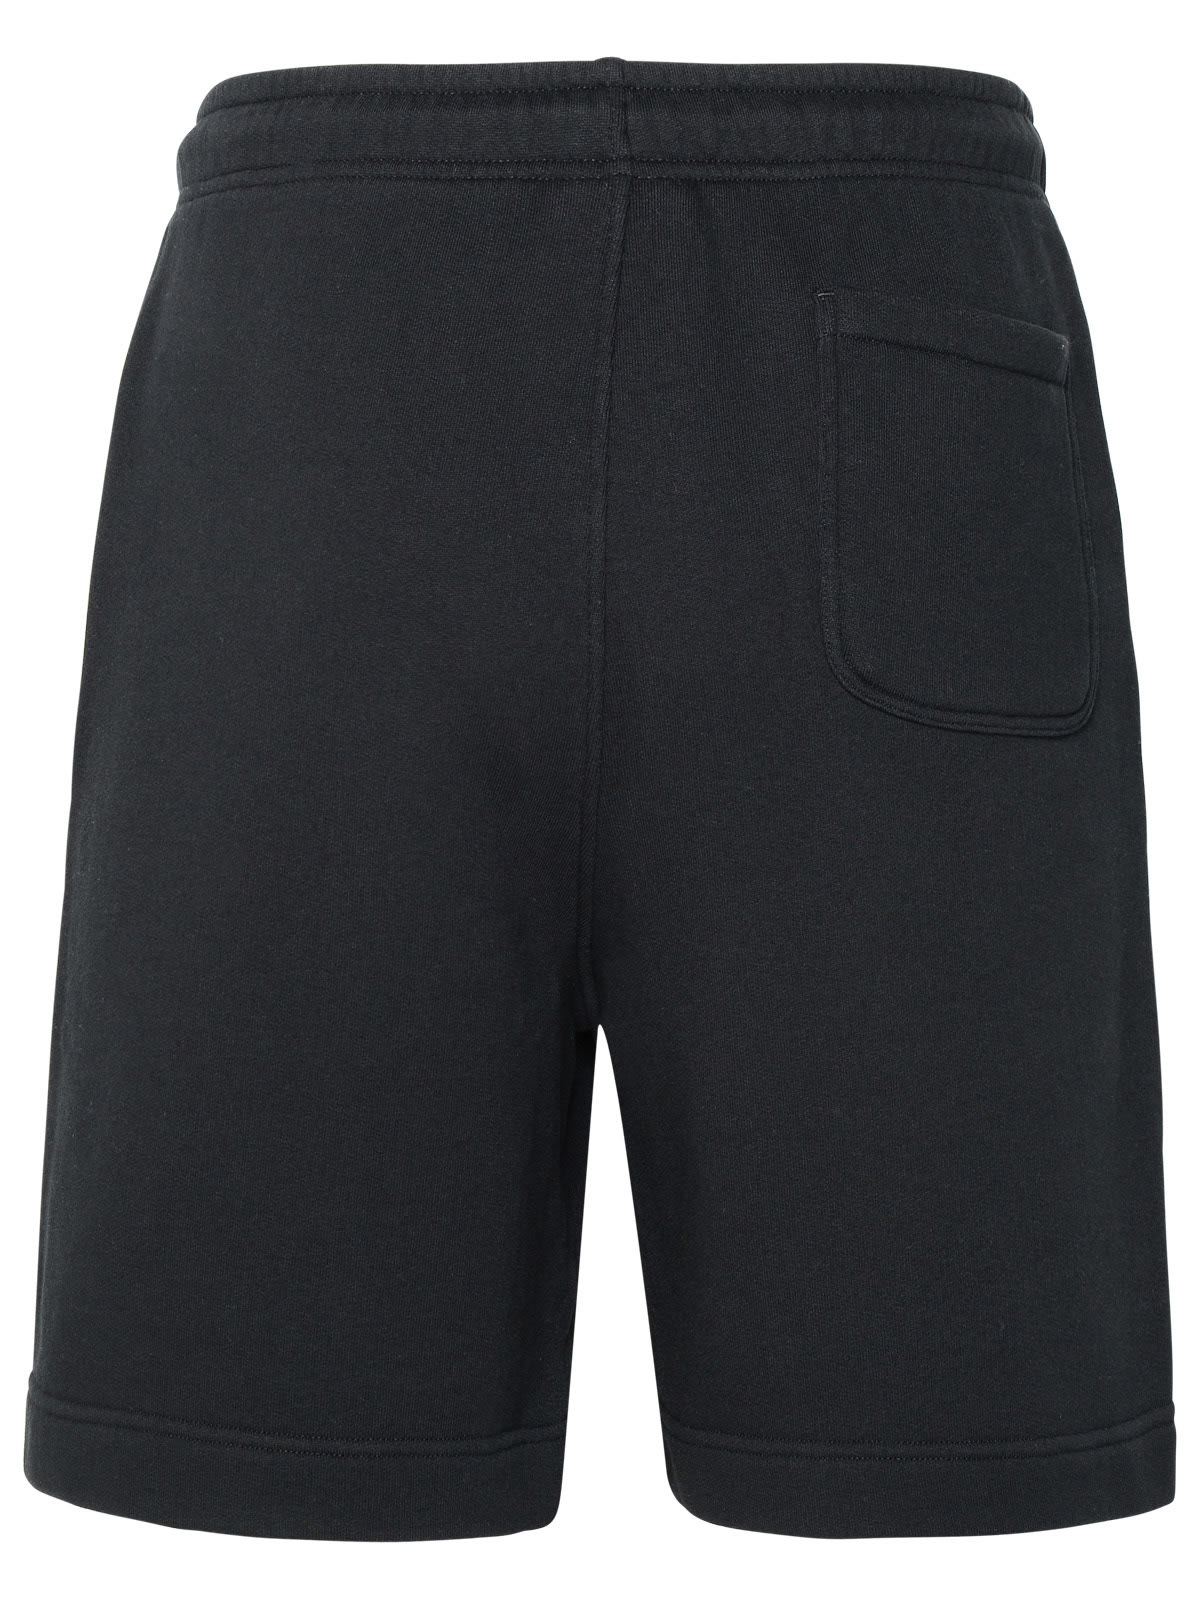 Shop Maison Kitsuné Black Cotton Bermuda Shorts